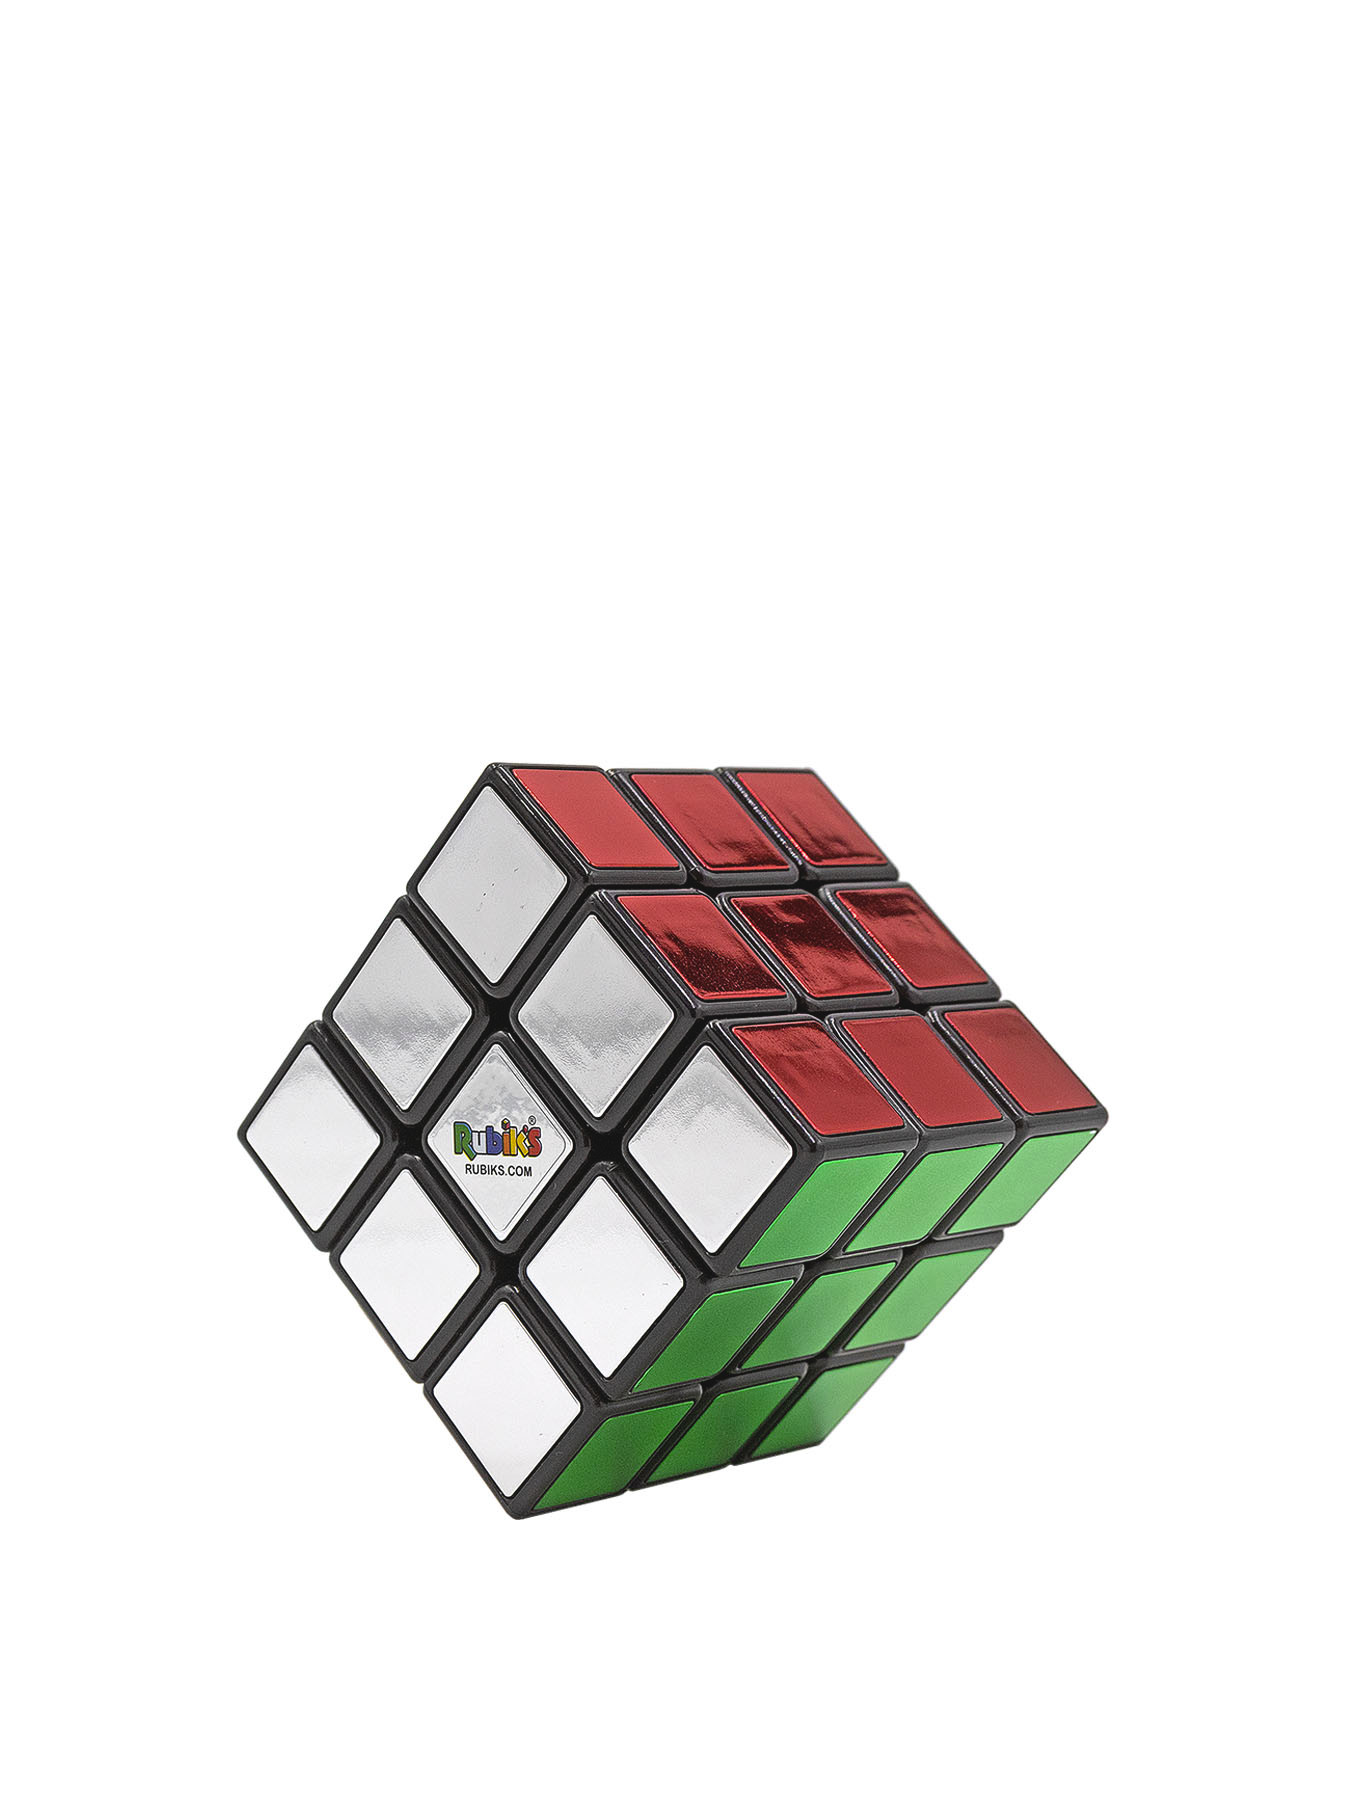 Rubik's Metallic 3x3 | Games & Puzzles | Fenwick